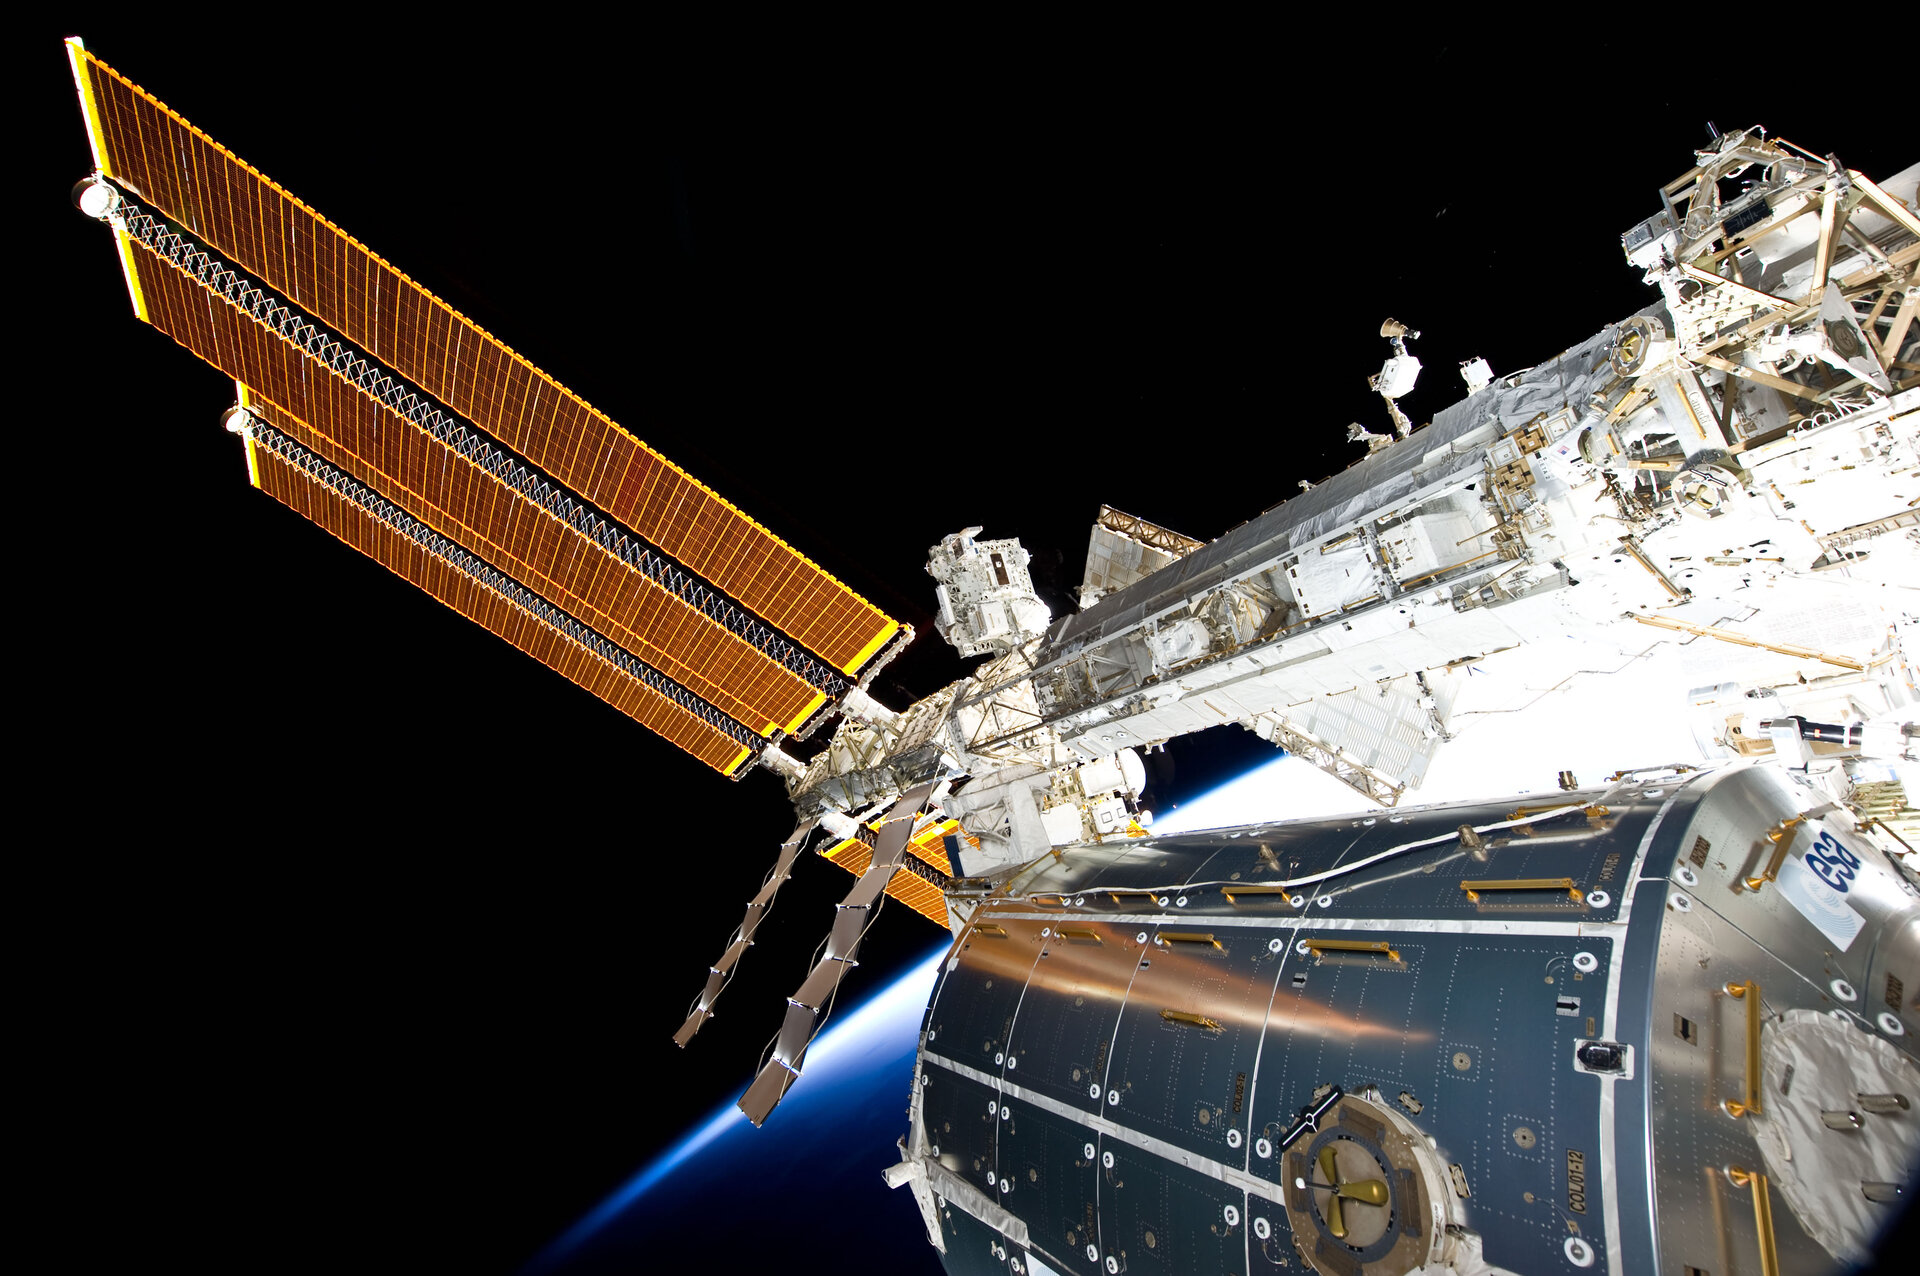 Columbus module on International Space Station